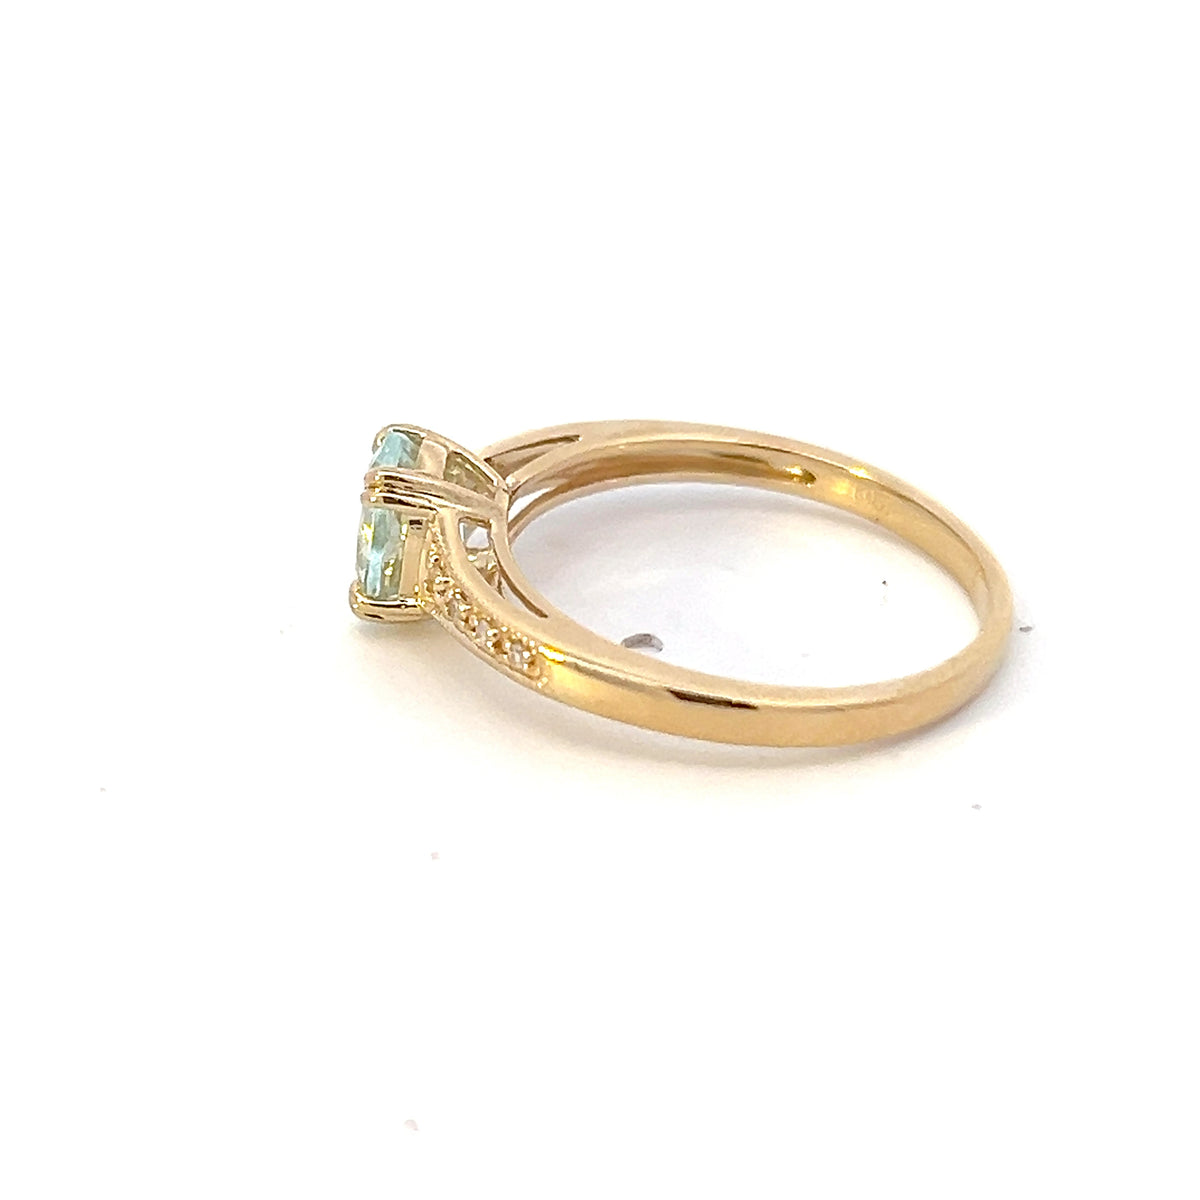 10K Yellow Gold 0.65cttw Aquamarine and 0.04cttw Diamond Ring, size 7